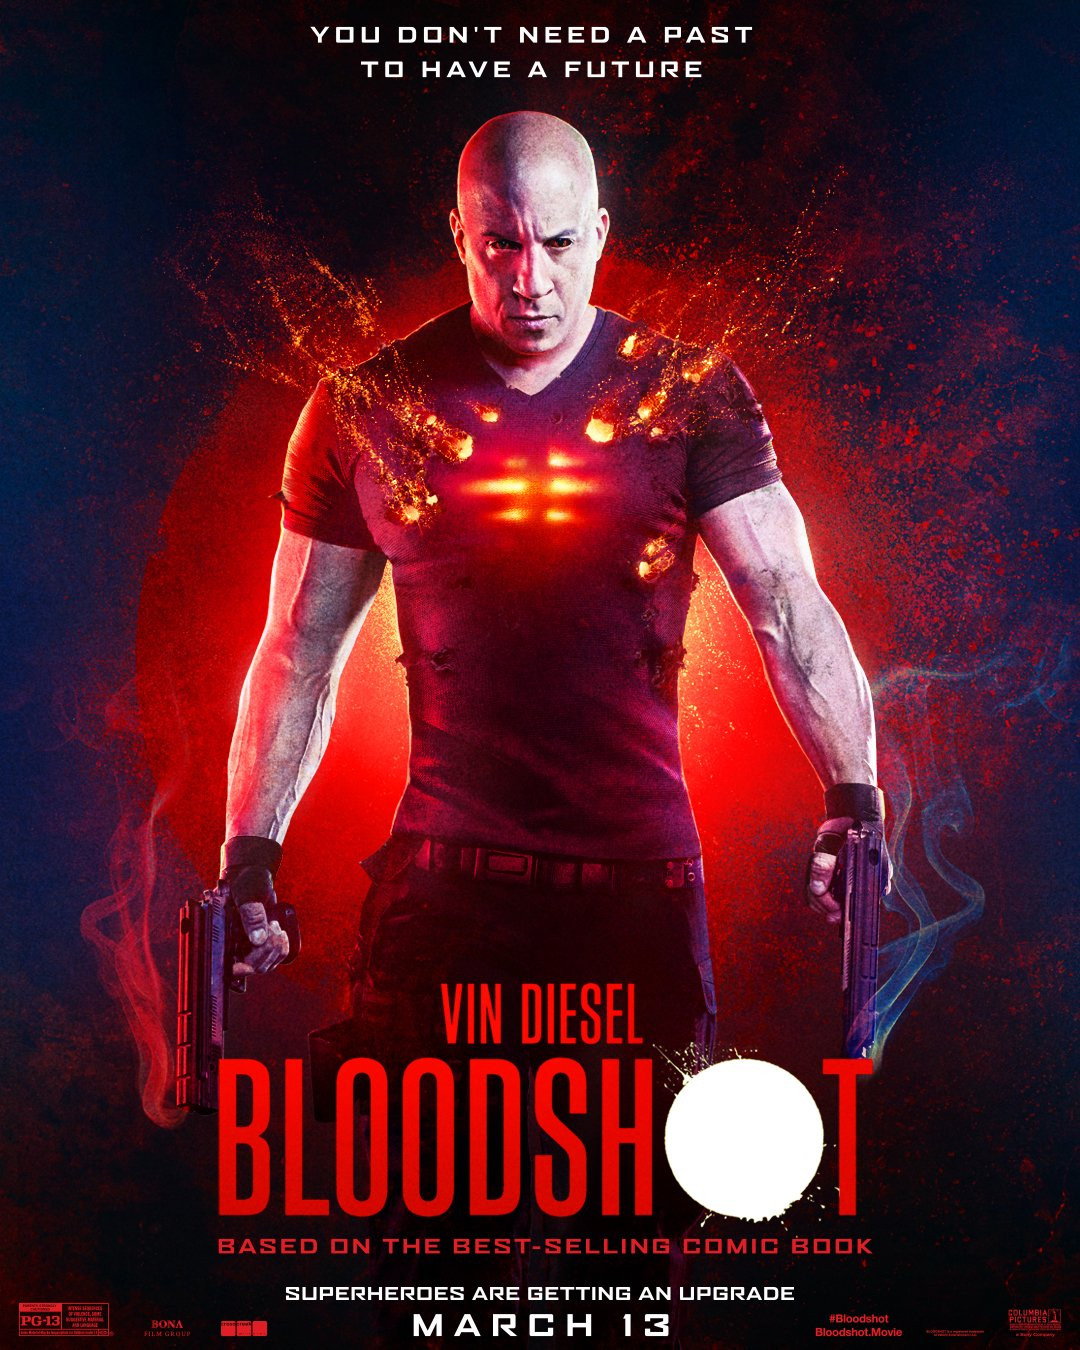 Vin Diesel Bloodshot poster